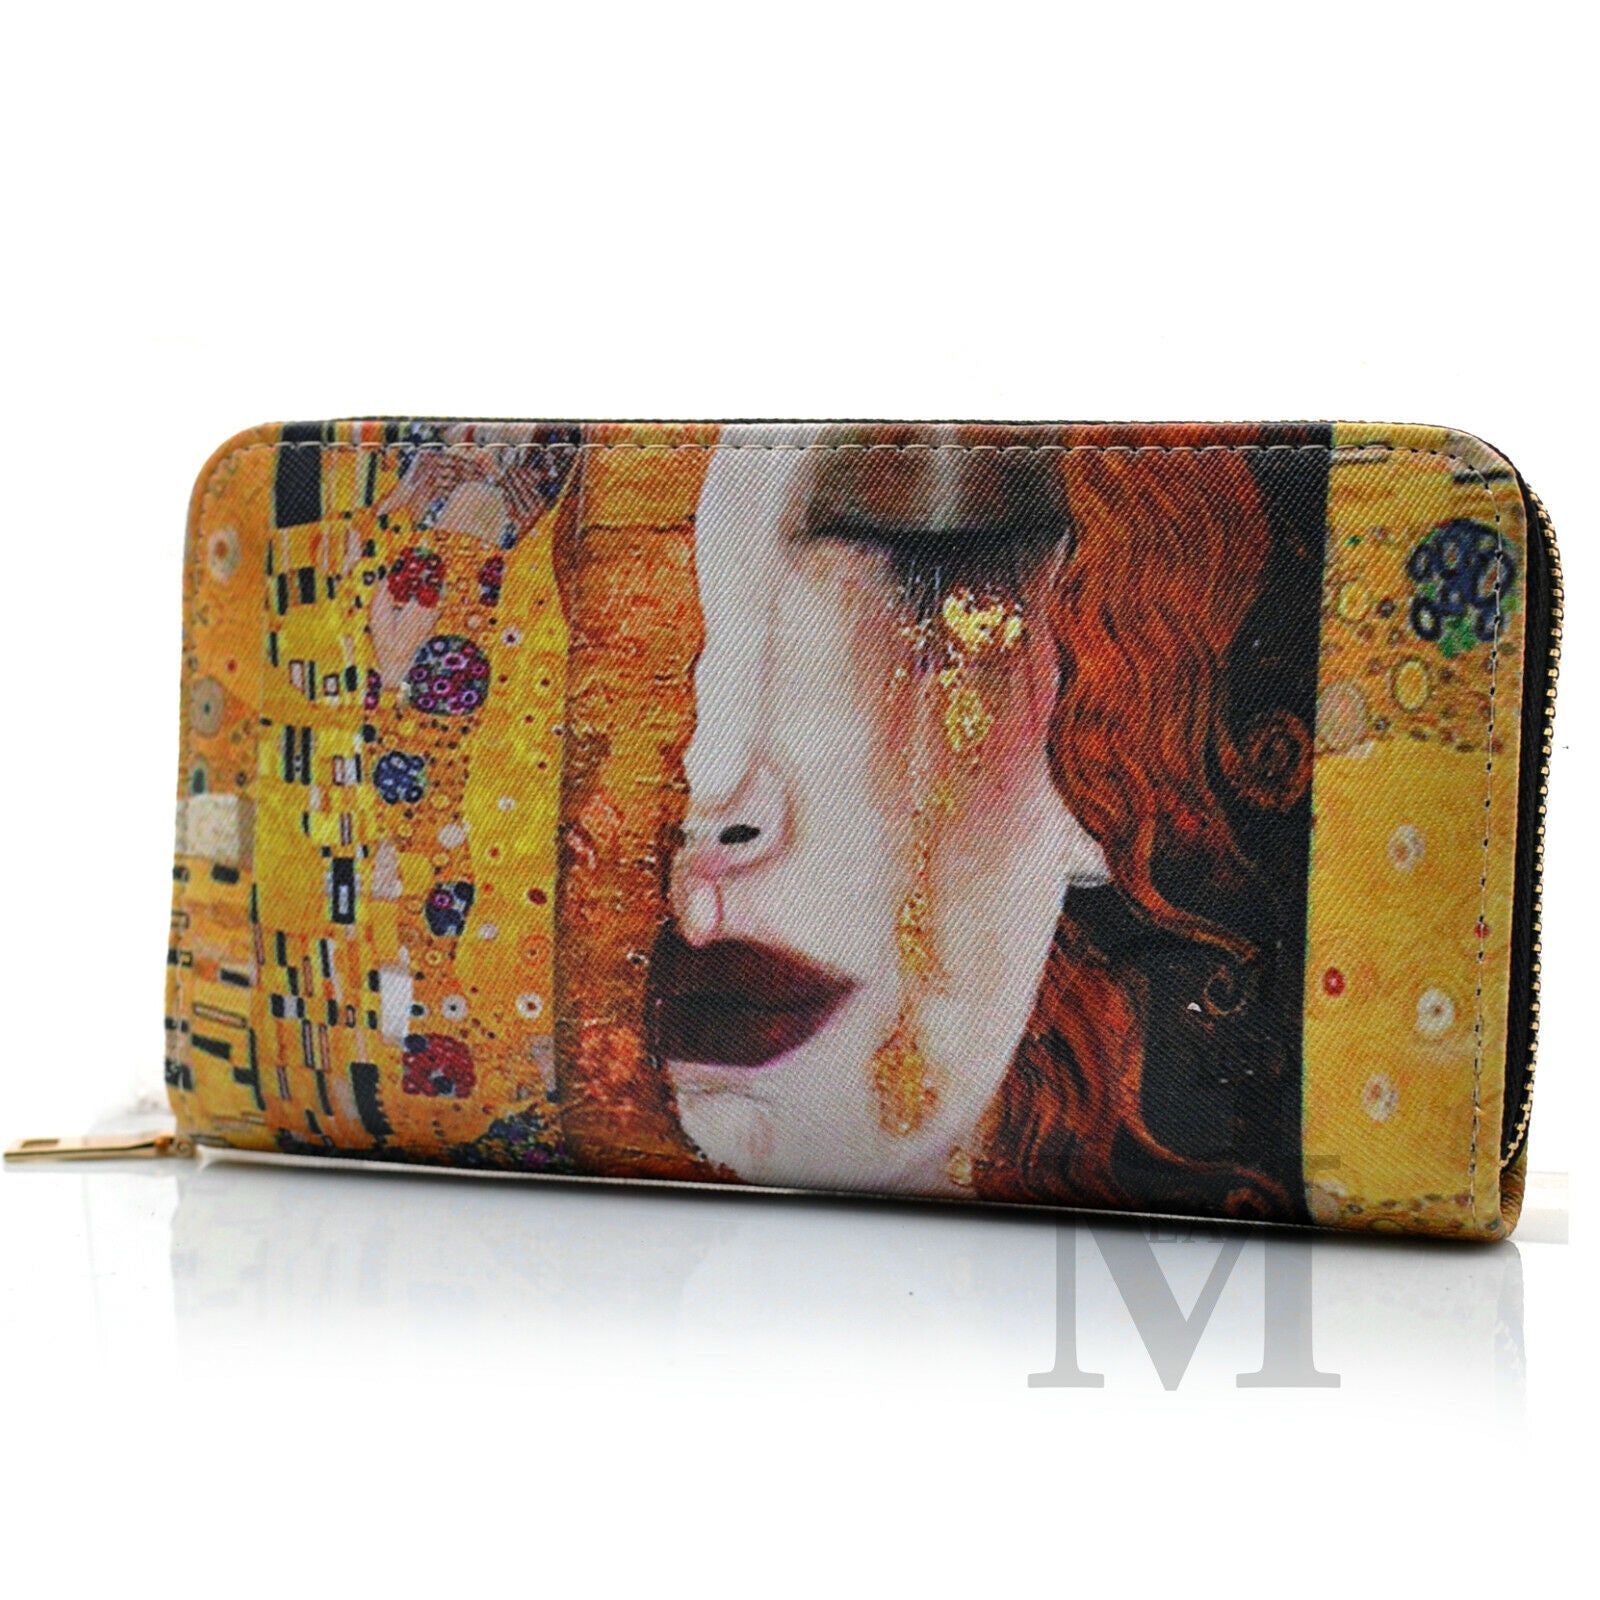 Portafoglio donna fantasia Klimt vincent van ghog il bacio la lacrima di freya